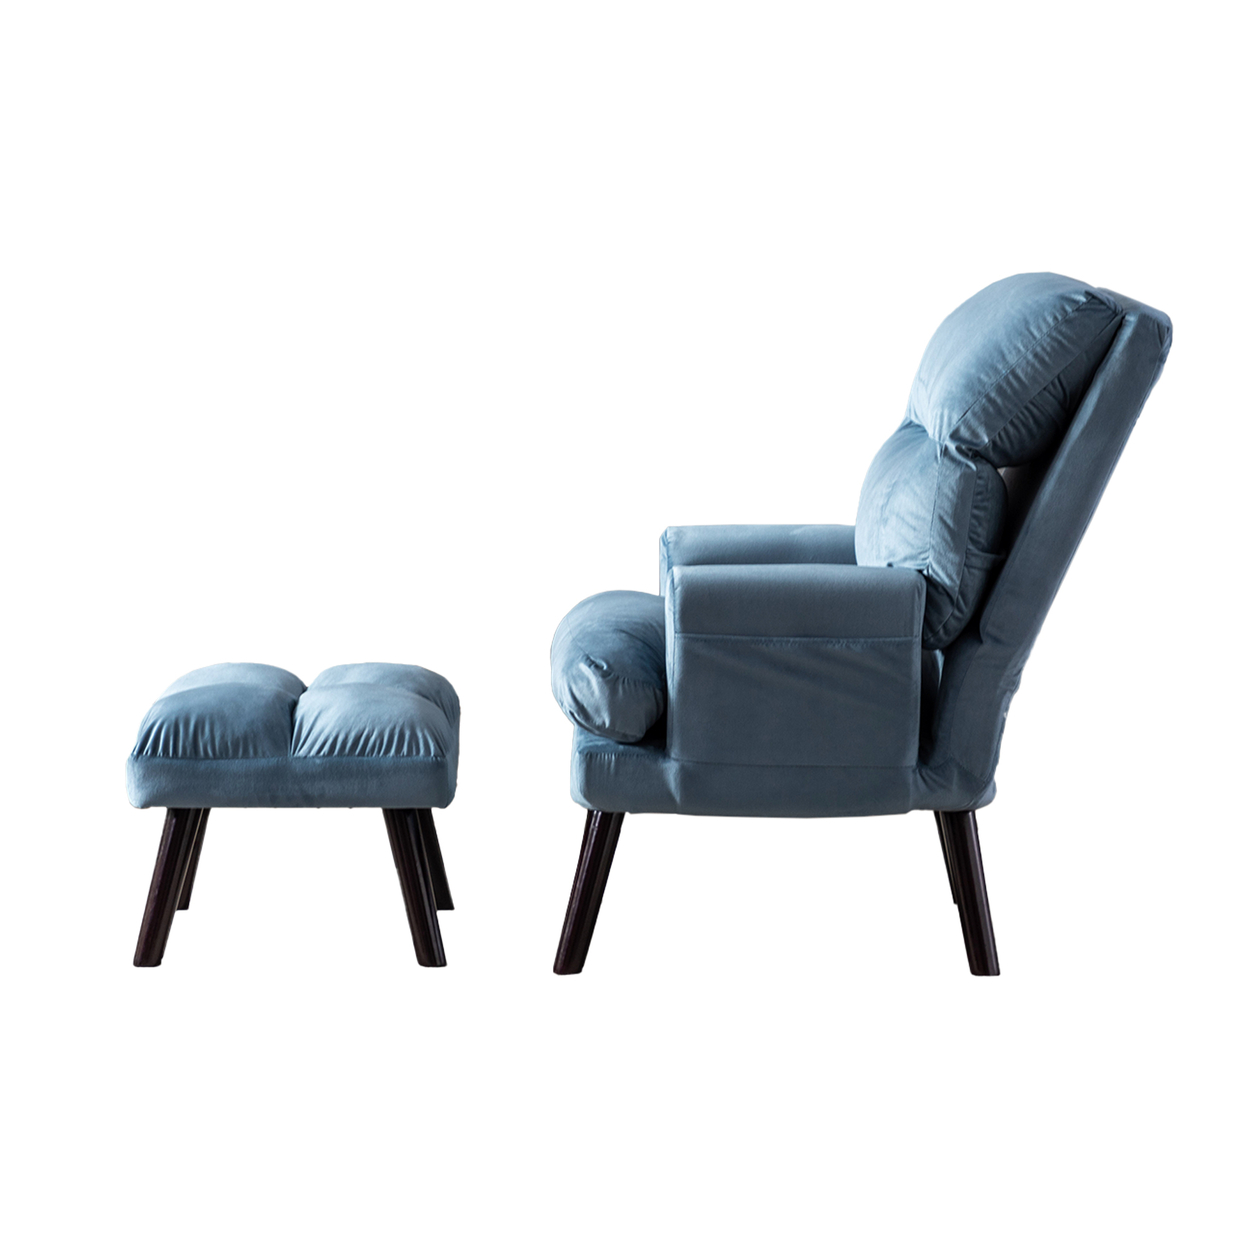 Nina 28 Inch 2 Piece Accent Chair And Ottoman Set, Splayed Legs, Blue - Saltoro Sherpi